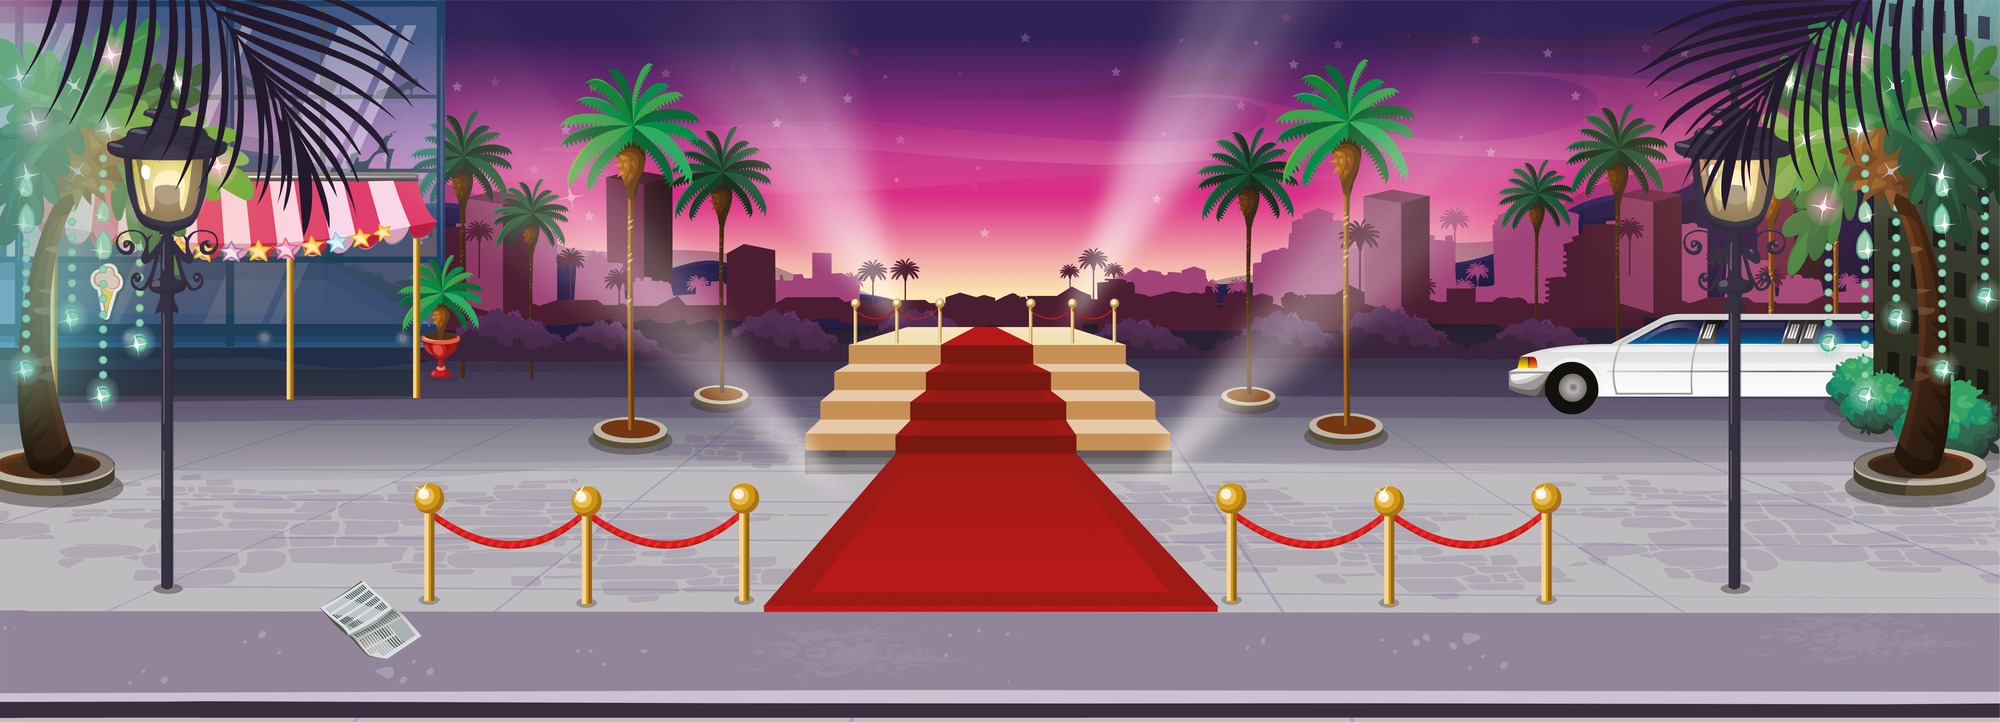 movie star wallpaper,red carpet,light,carpet,theatrical scenery,flooring